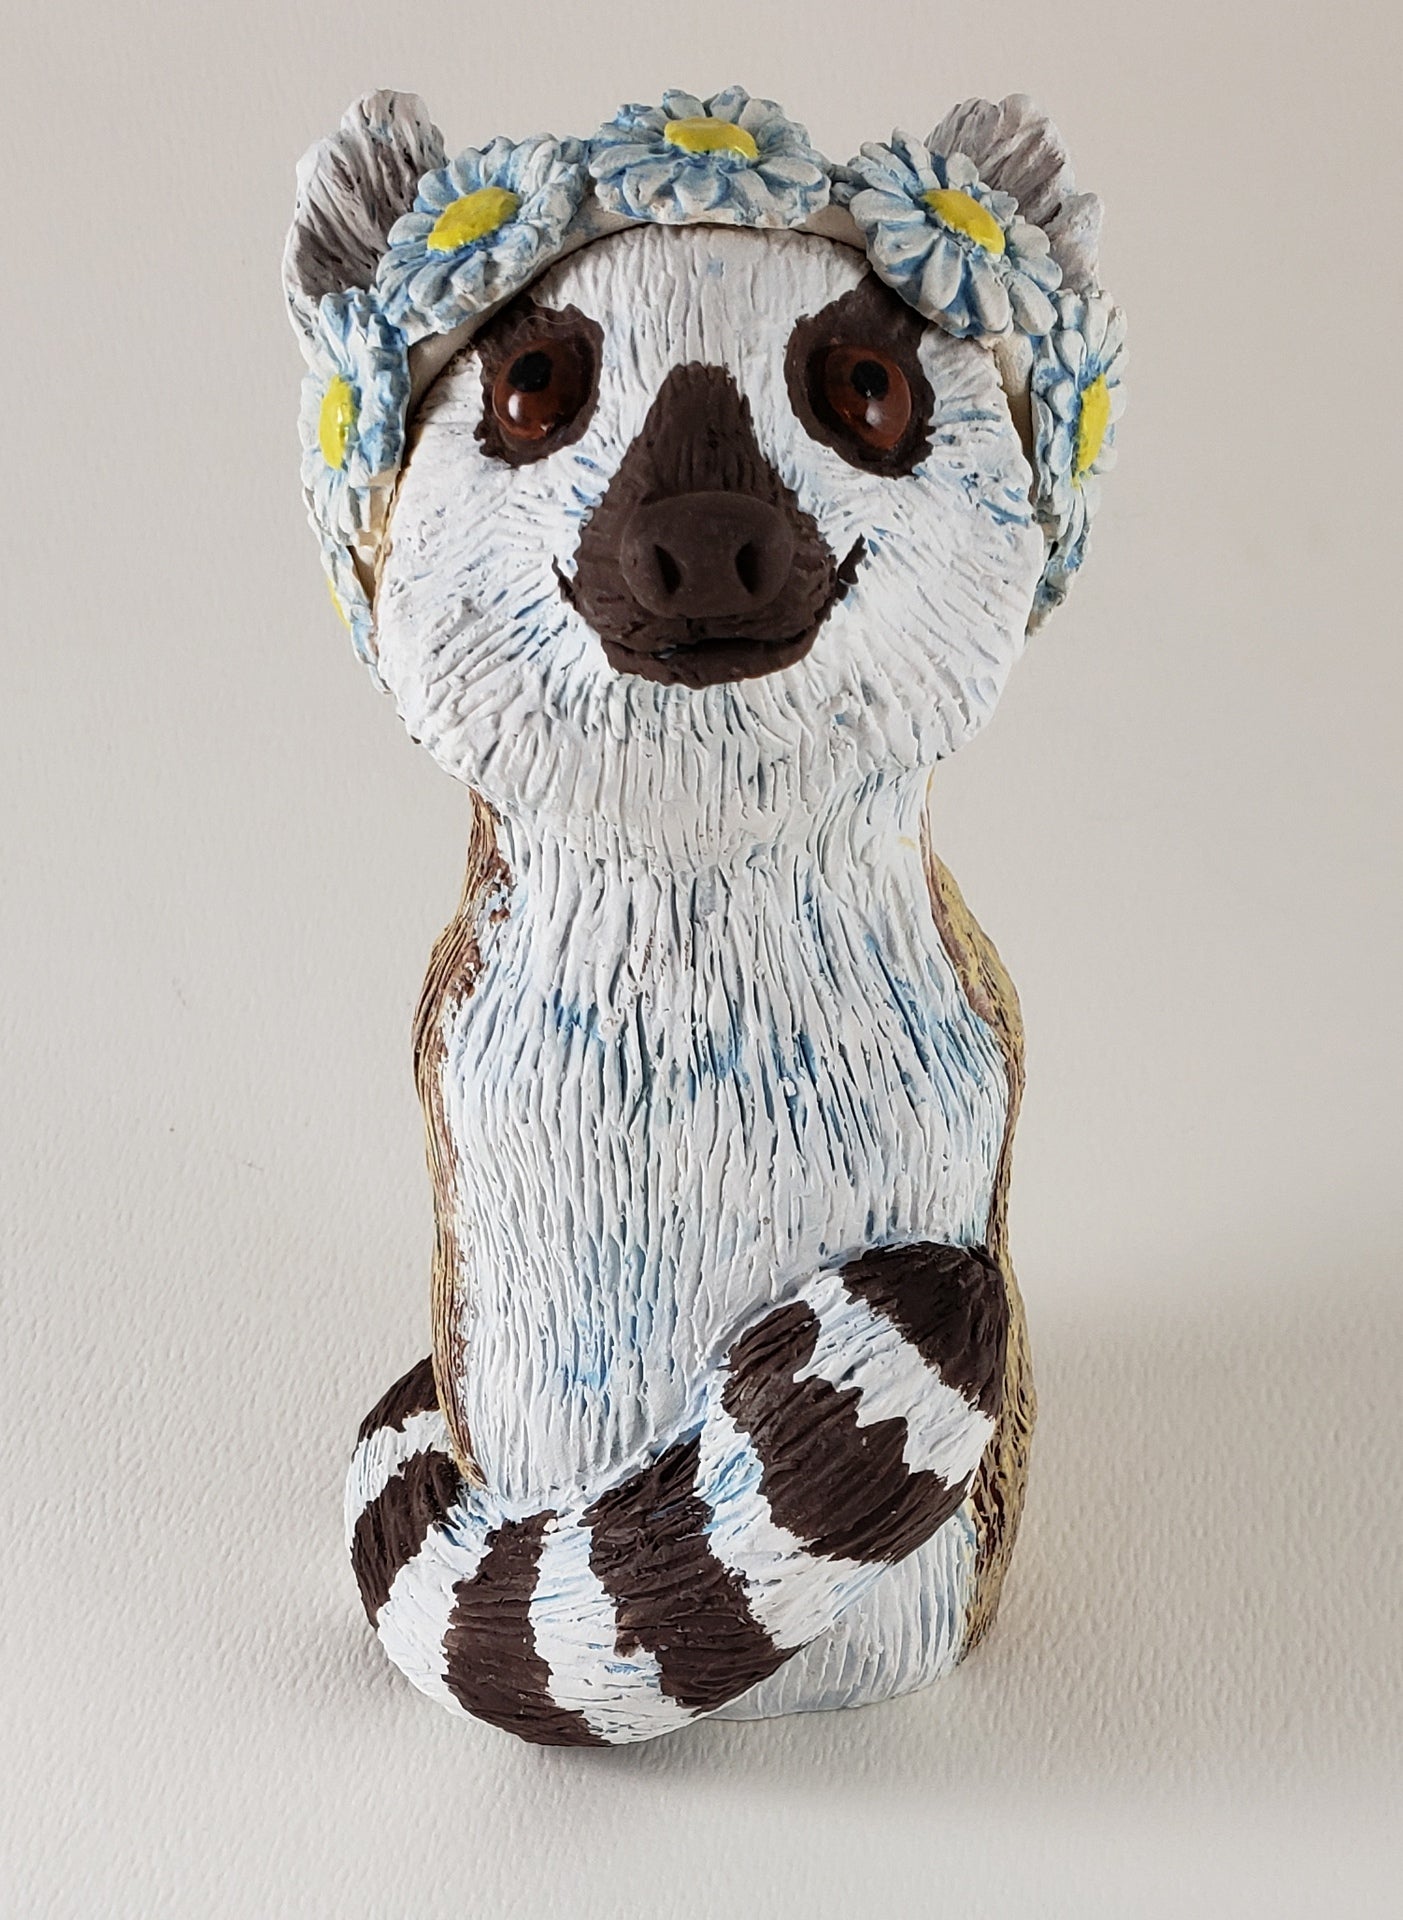 Rochelle the Ring Tailed Lemur Wears a Daisy Headband - Artworks by Karen Fincannon